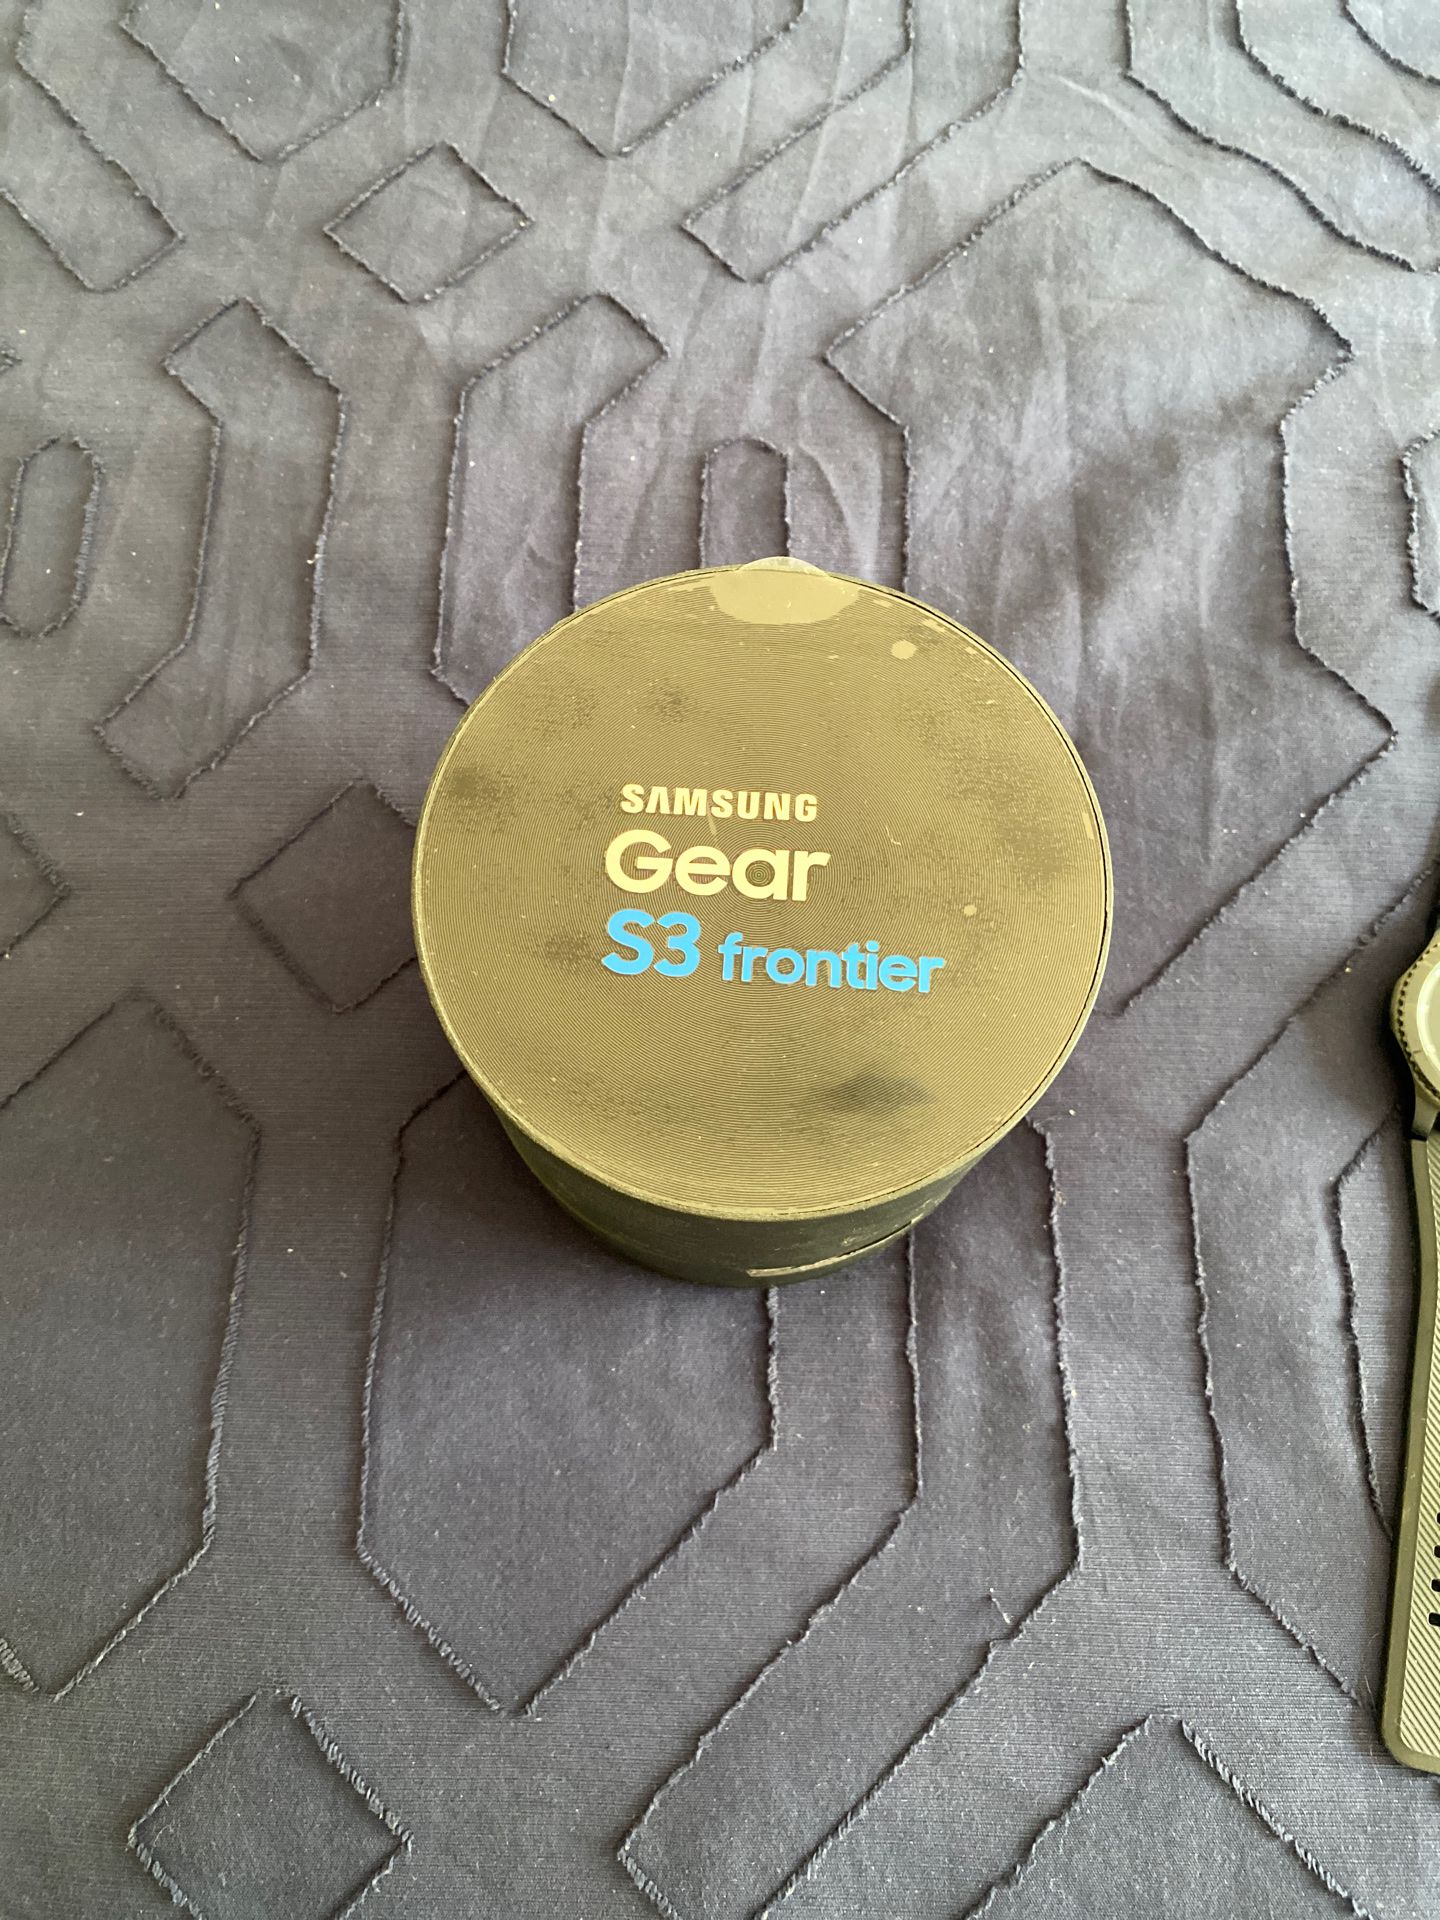 Samsung gear 3 frontier